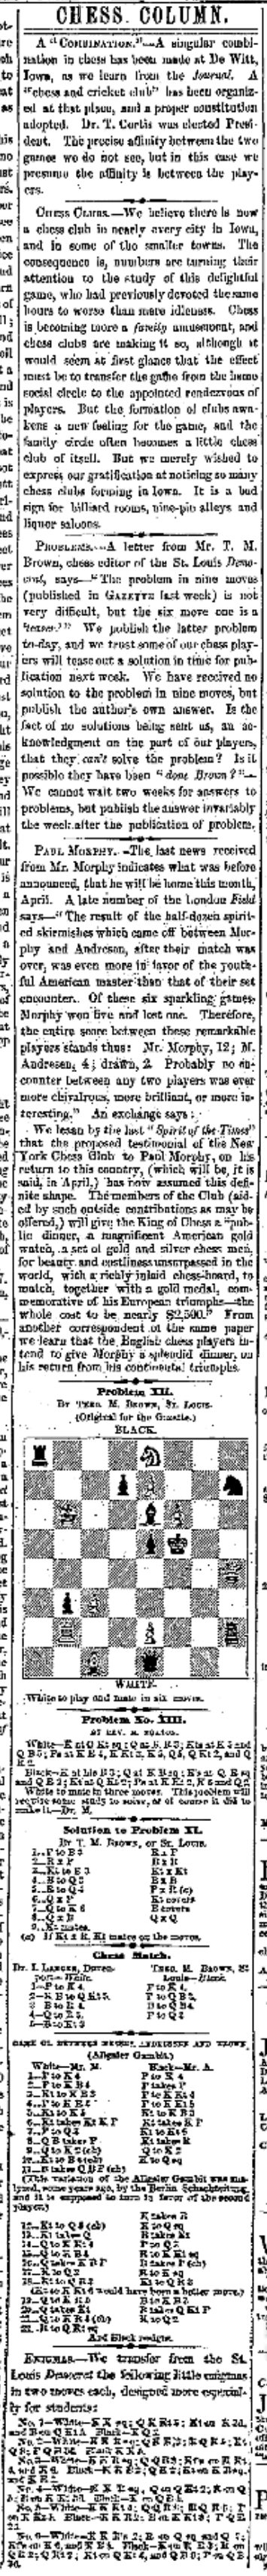 1859.04.01-01 Davenport Daily Gazette.png